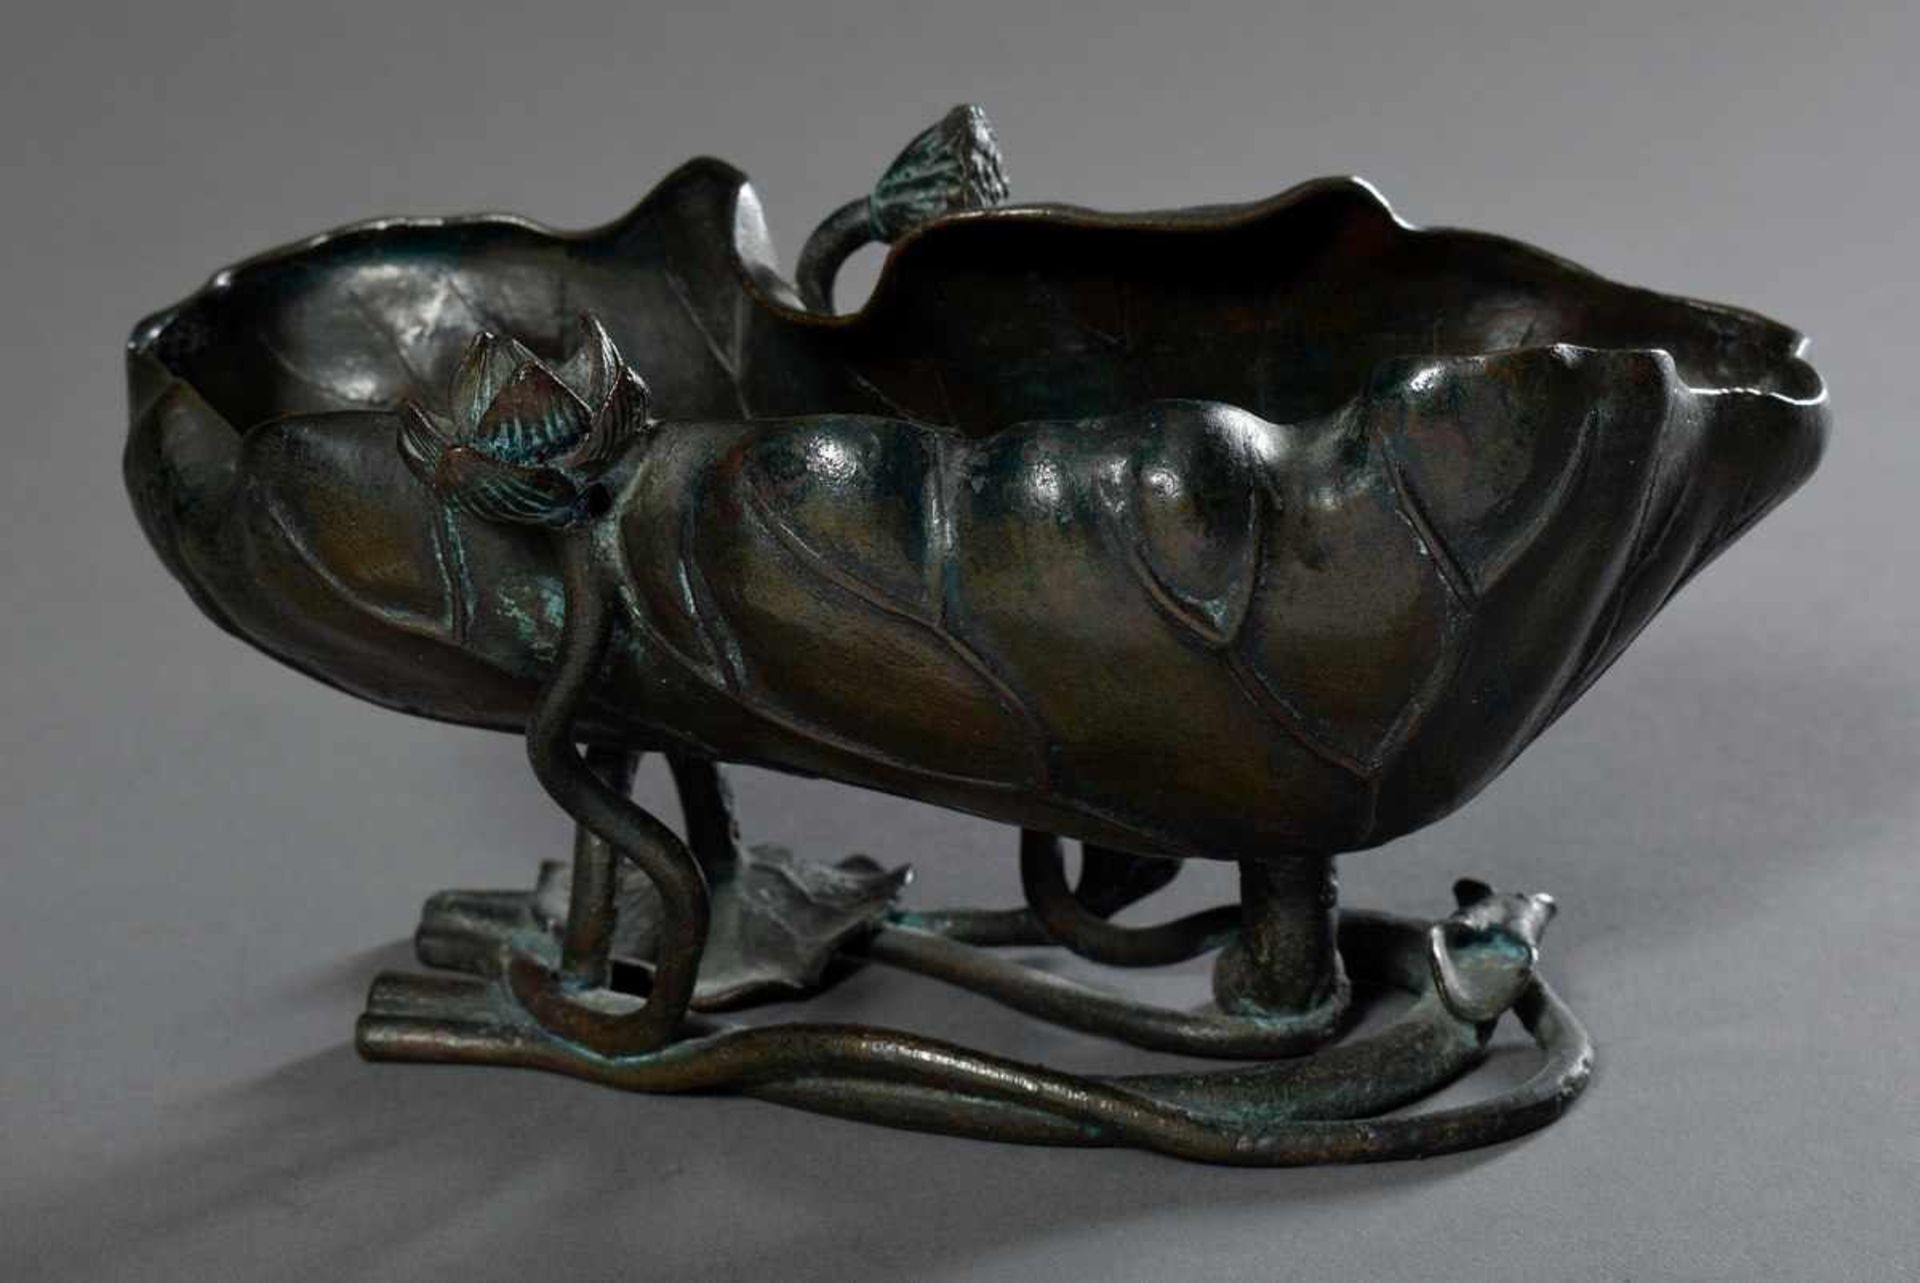 Japanische Bronze Schale "Lotusblatt", gemarkt "Japan", 20. Jh., 9,5x20x9cmJapanese bronze bowl "